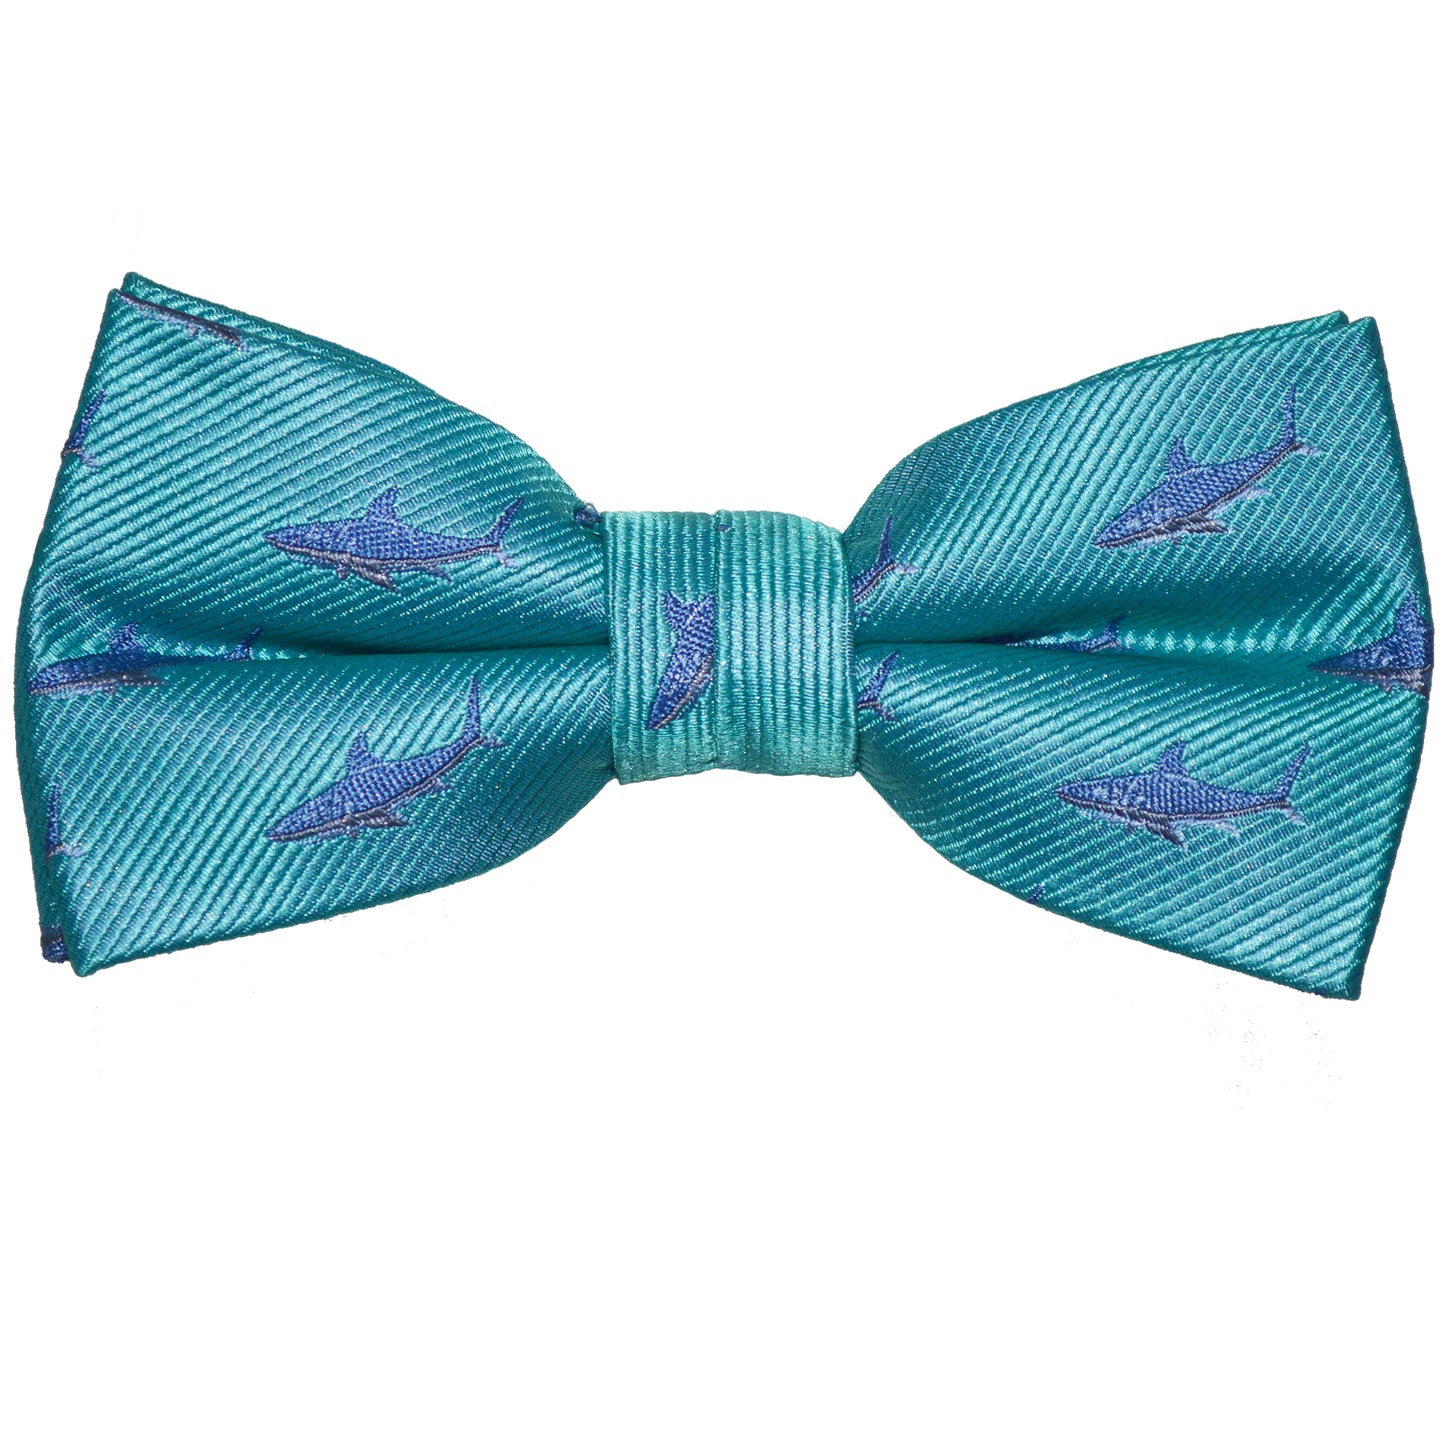 Shark Bow Tie - Aqua, Woven Silk, Pre-Tied for Kids - SummerTies